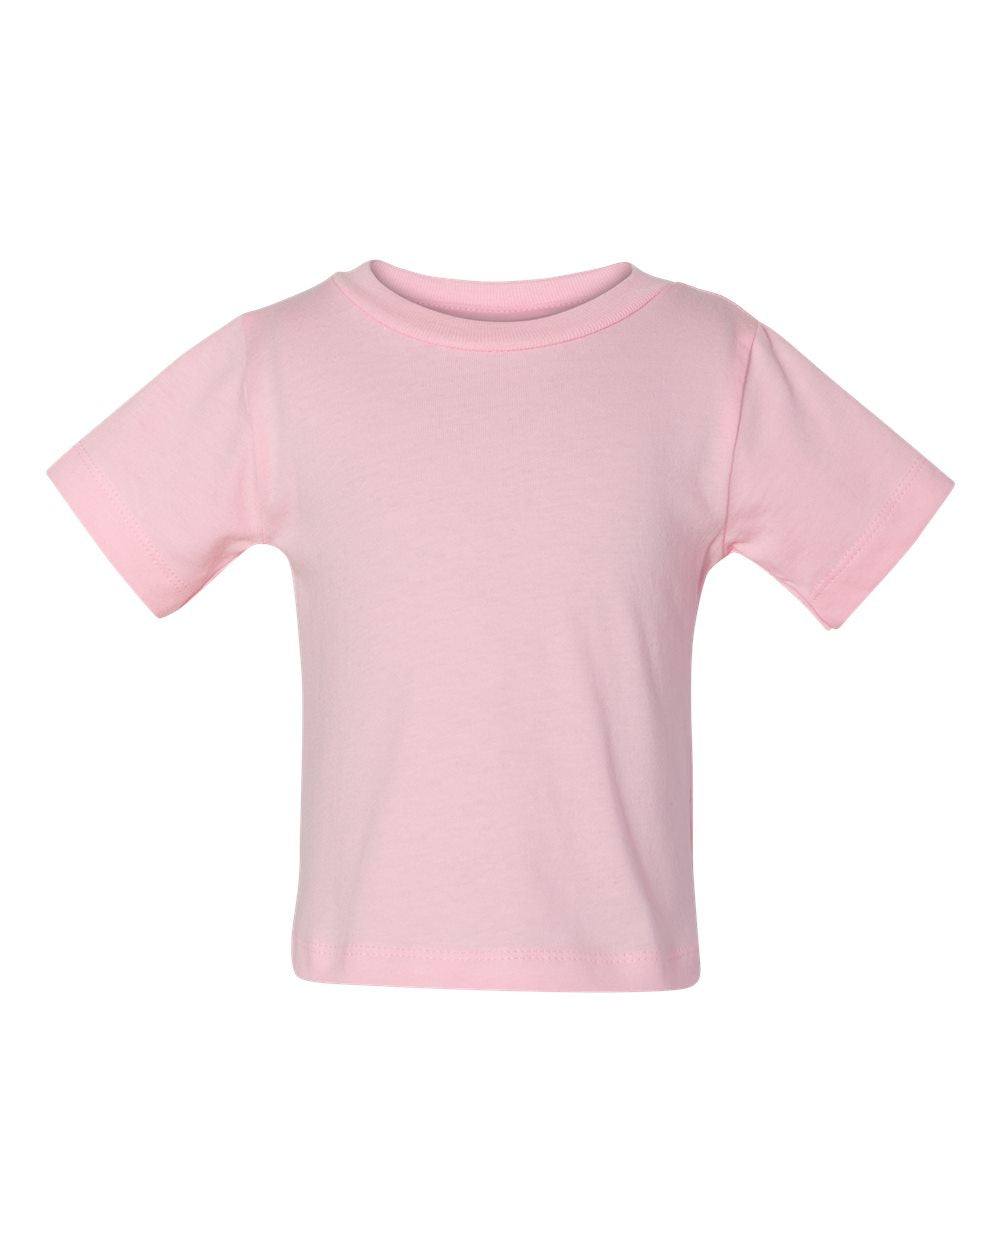 Infant-Toddler "Build A Tee" Bella Canvas Short Sleeve Blank T-Shirt